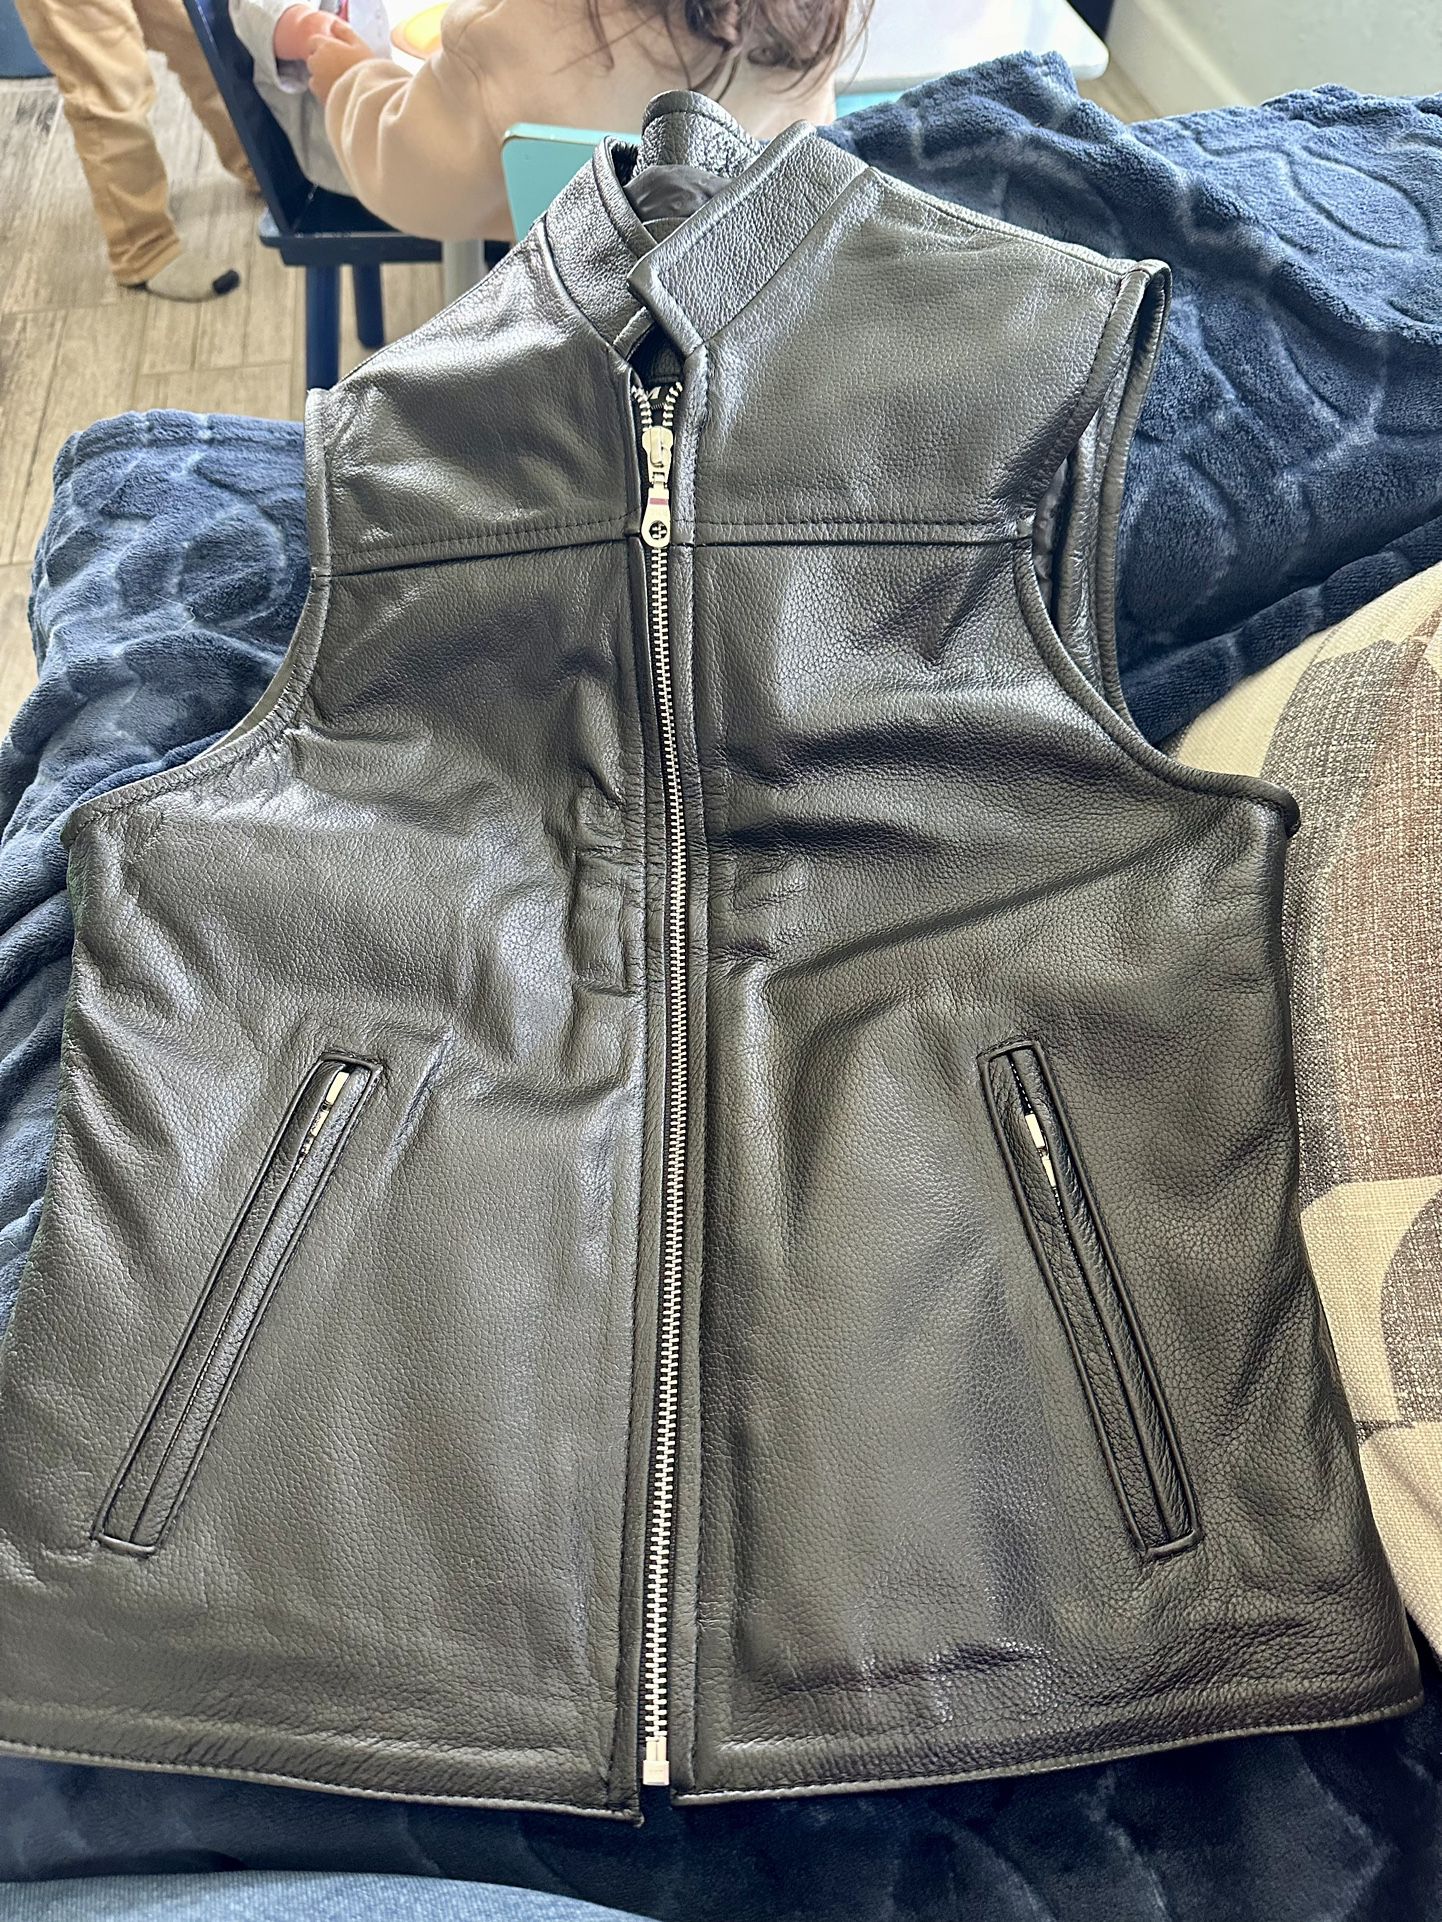 NEW- Women Black Leather Vest $70